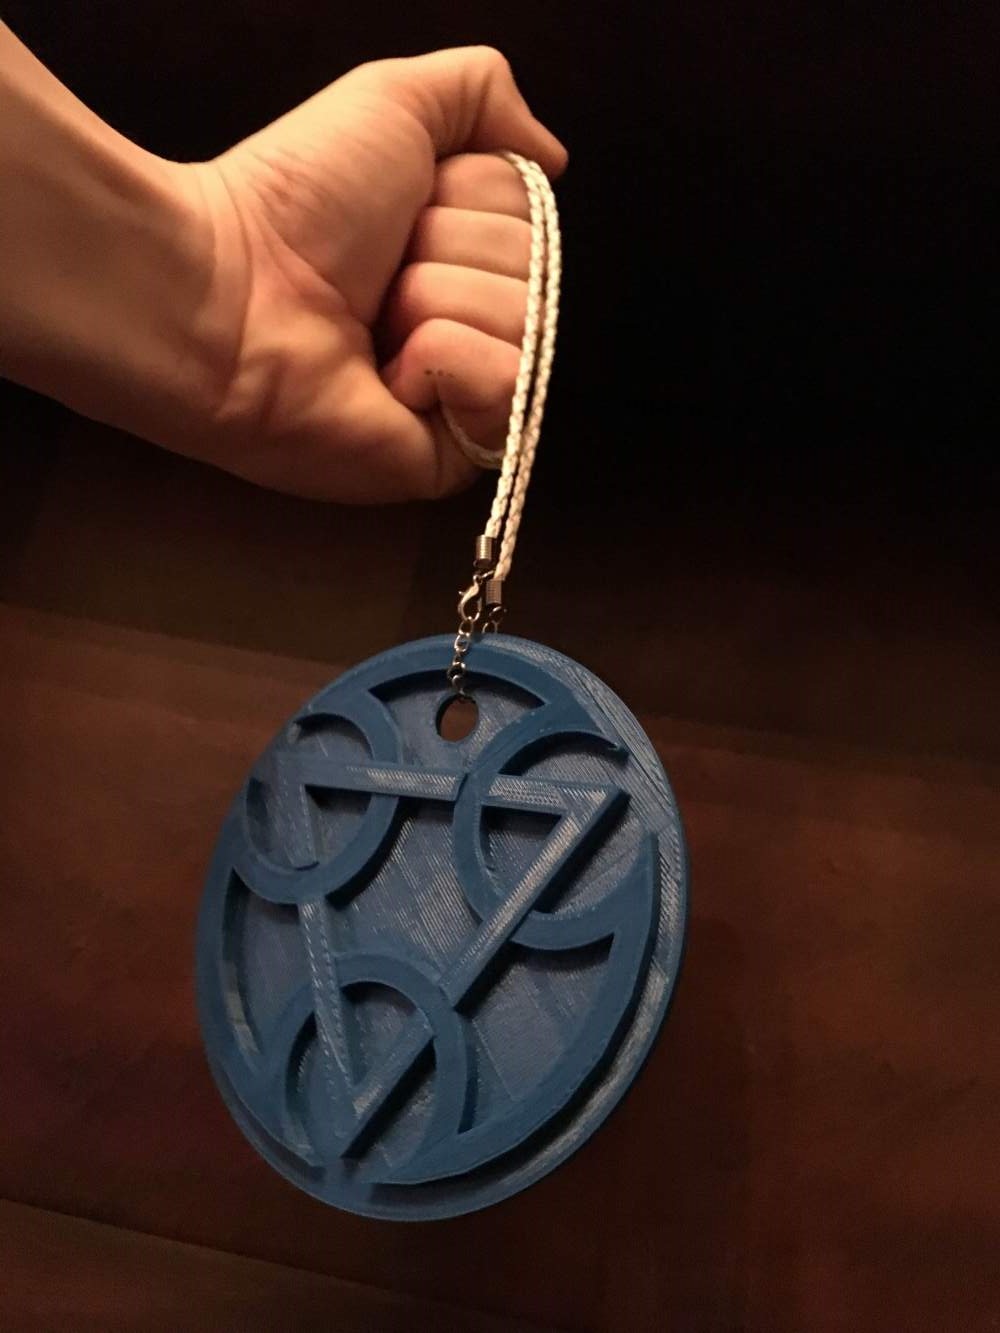 Lin-Kuei medallion by "ARTISTIC DEFENSE"